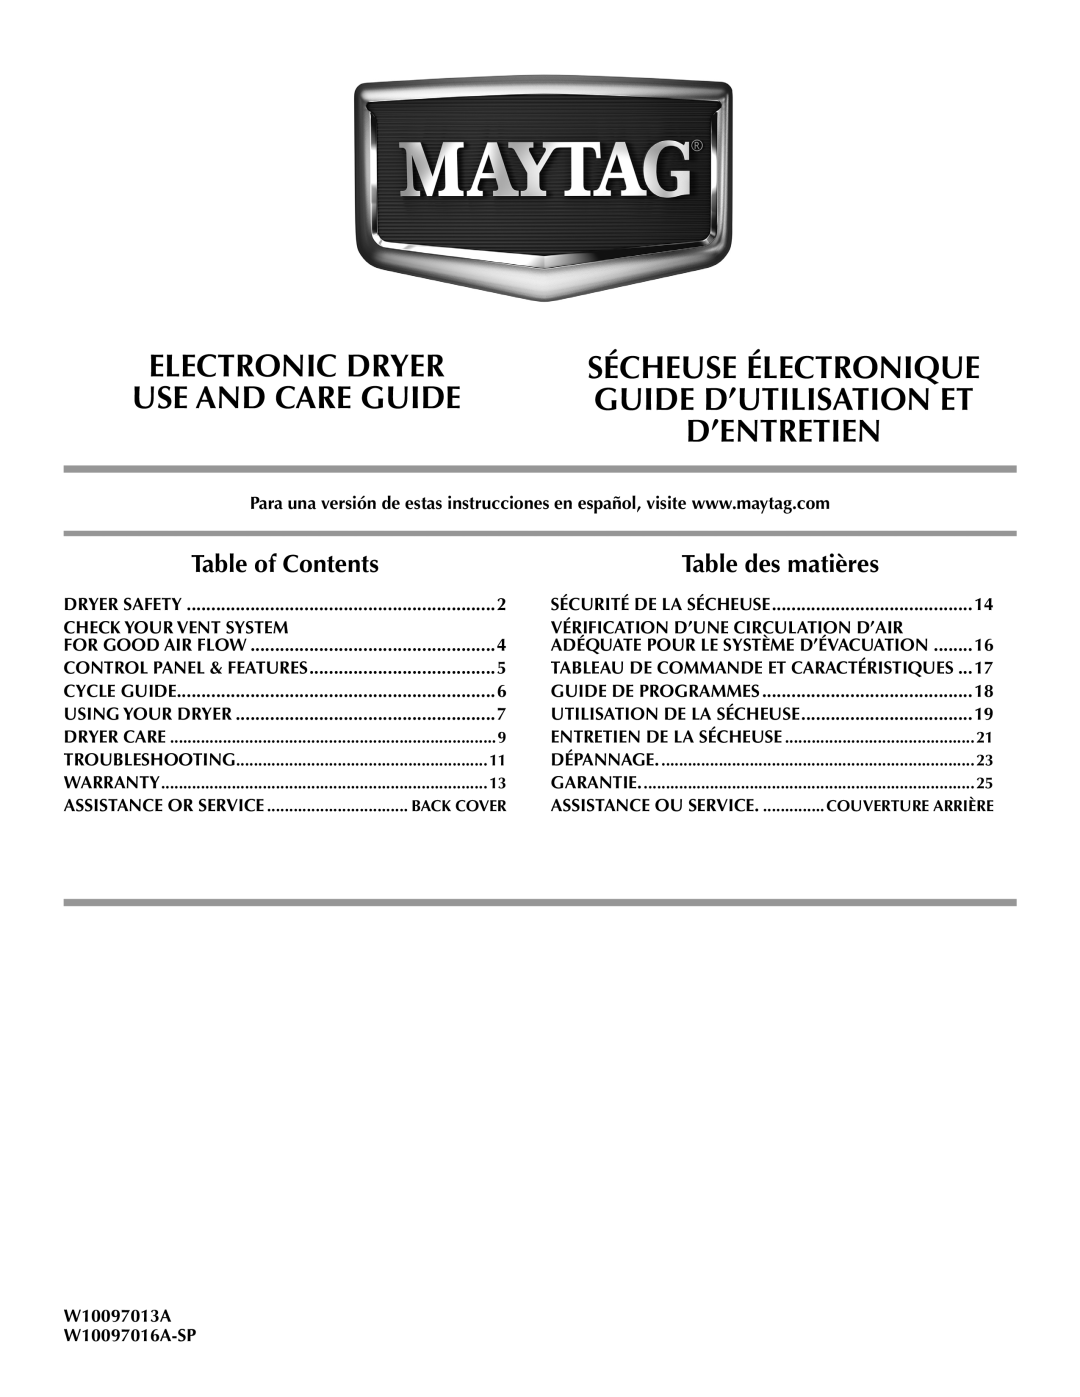 Maytag W10097013A warranty Table des matières, Guide D’Utilisation Et, Use And Care Guide, Electronic Dryer, D’Entretien 